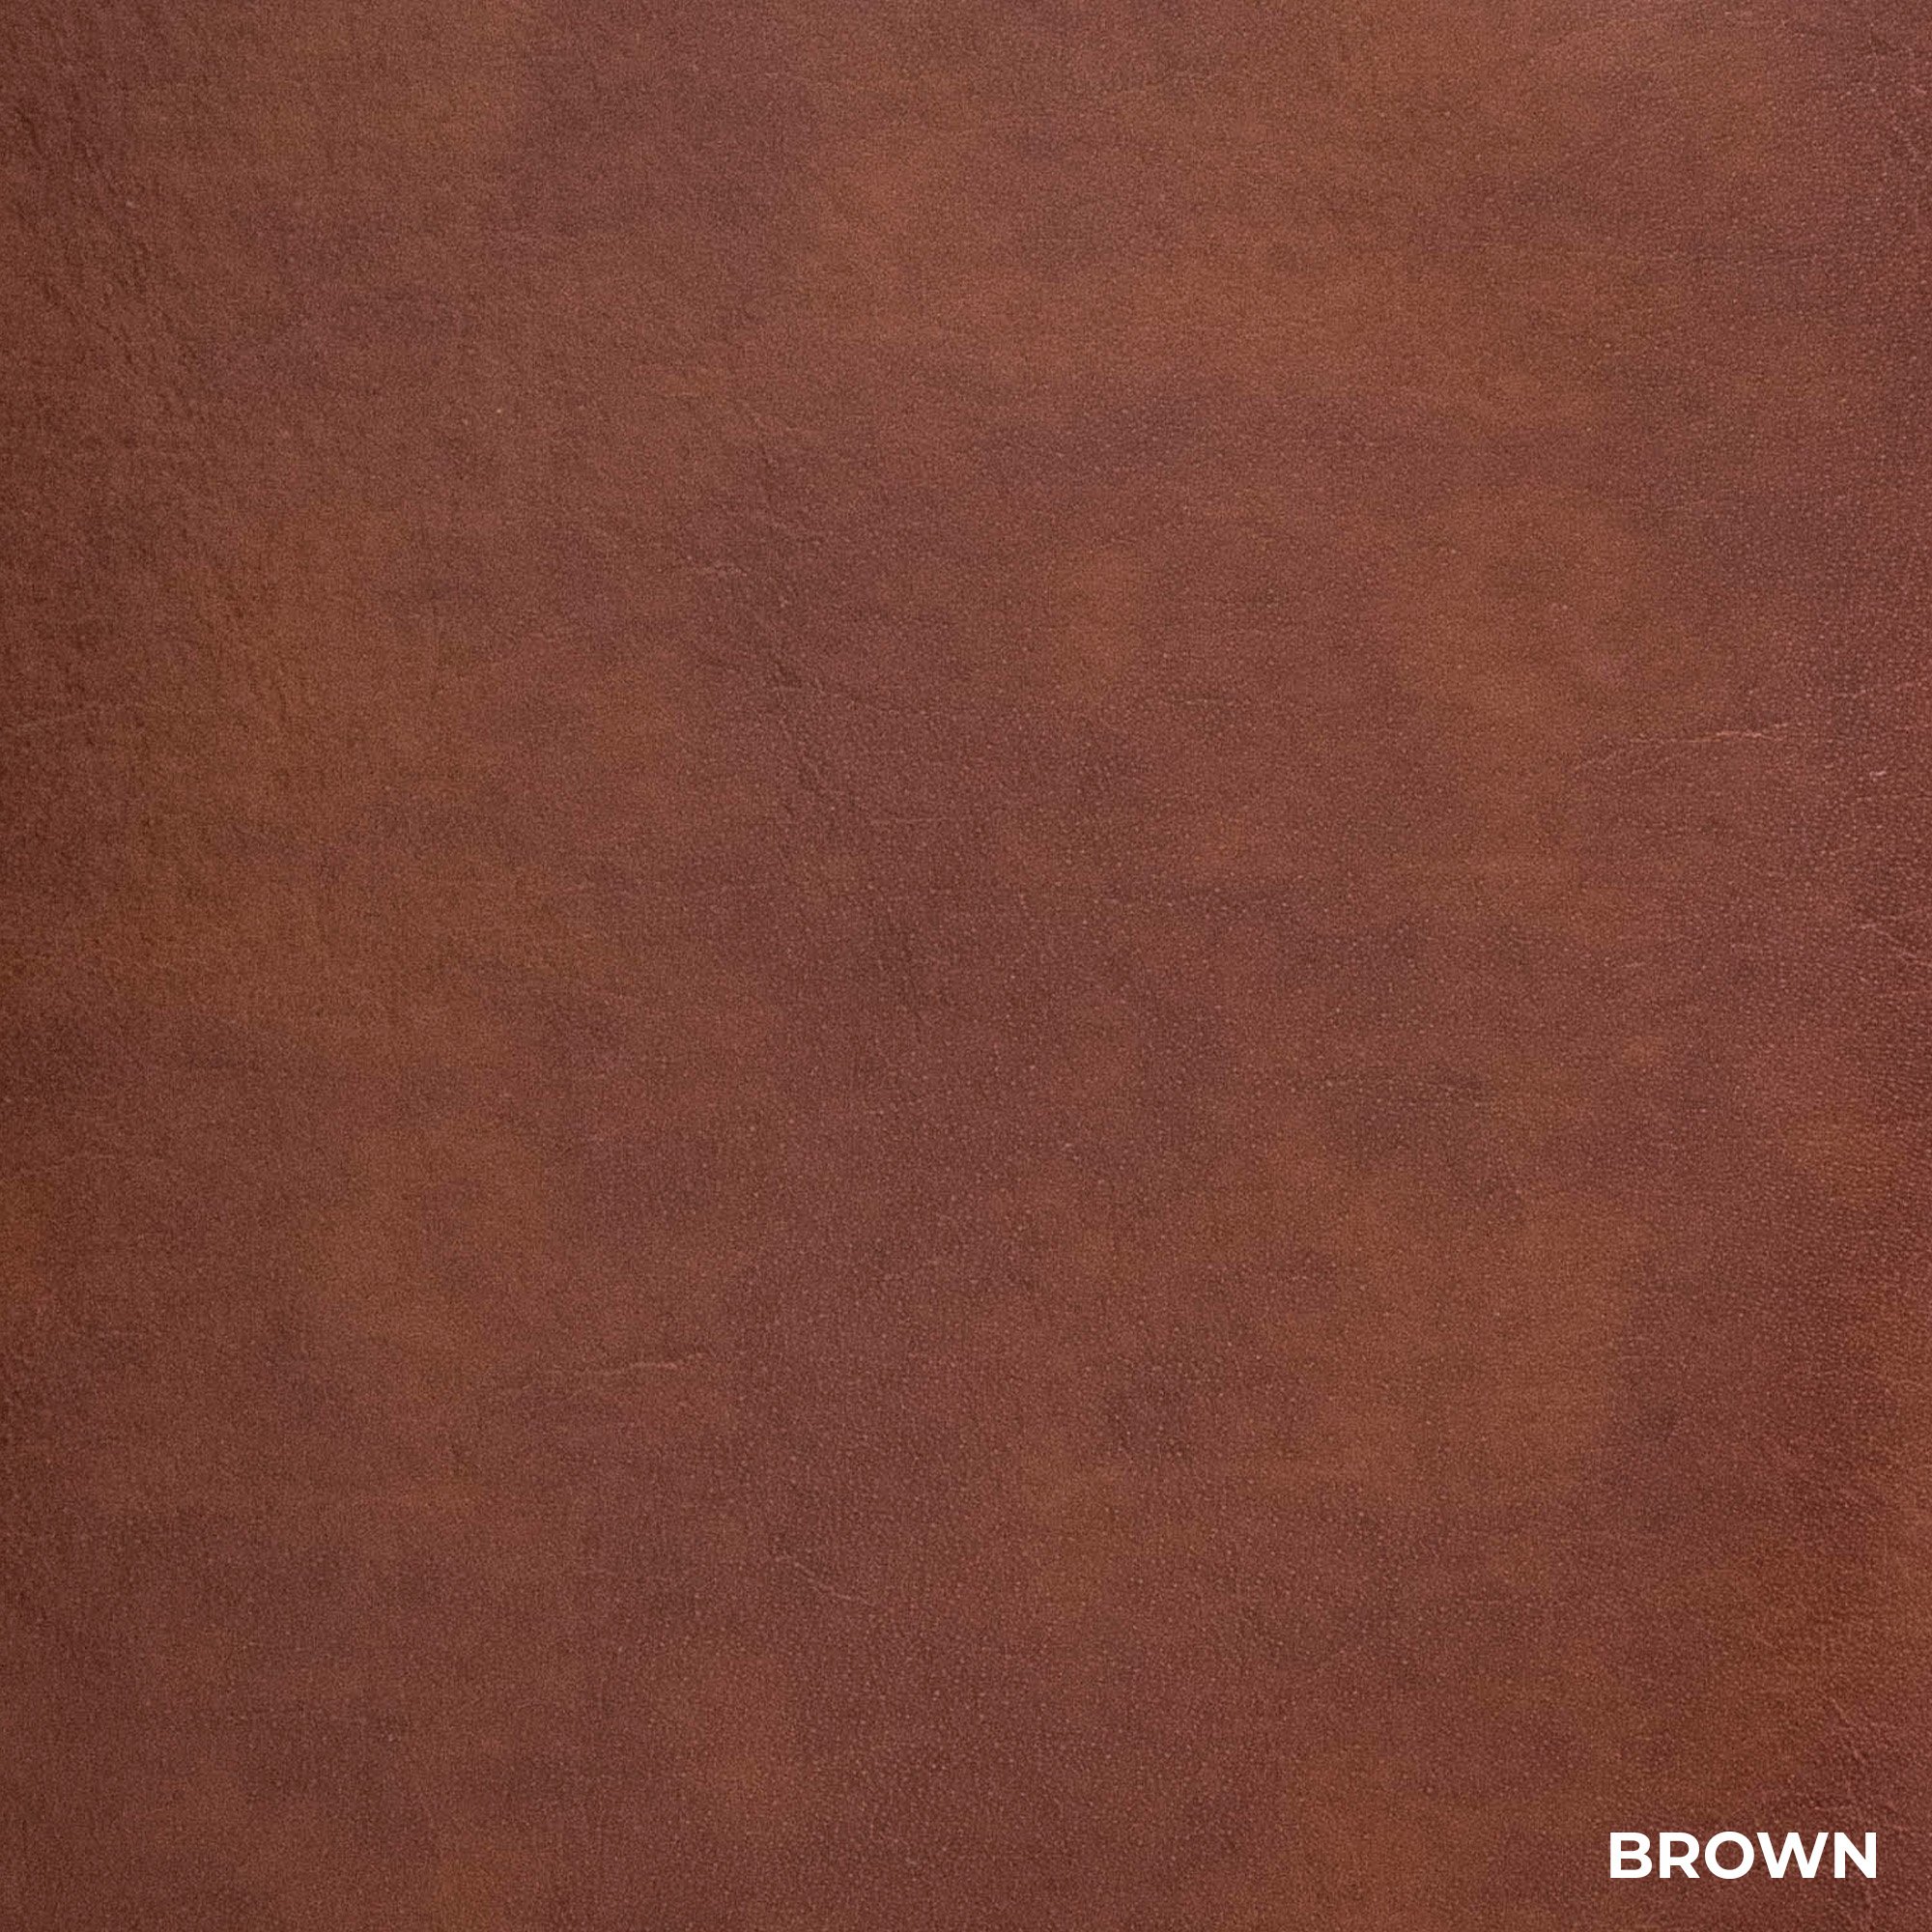 Tuxedo Leather Brown